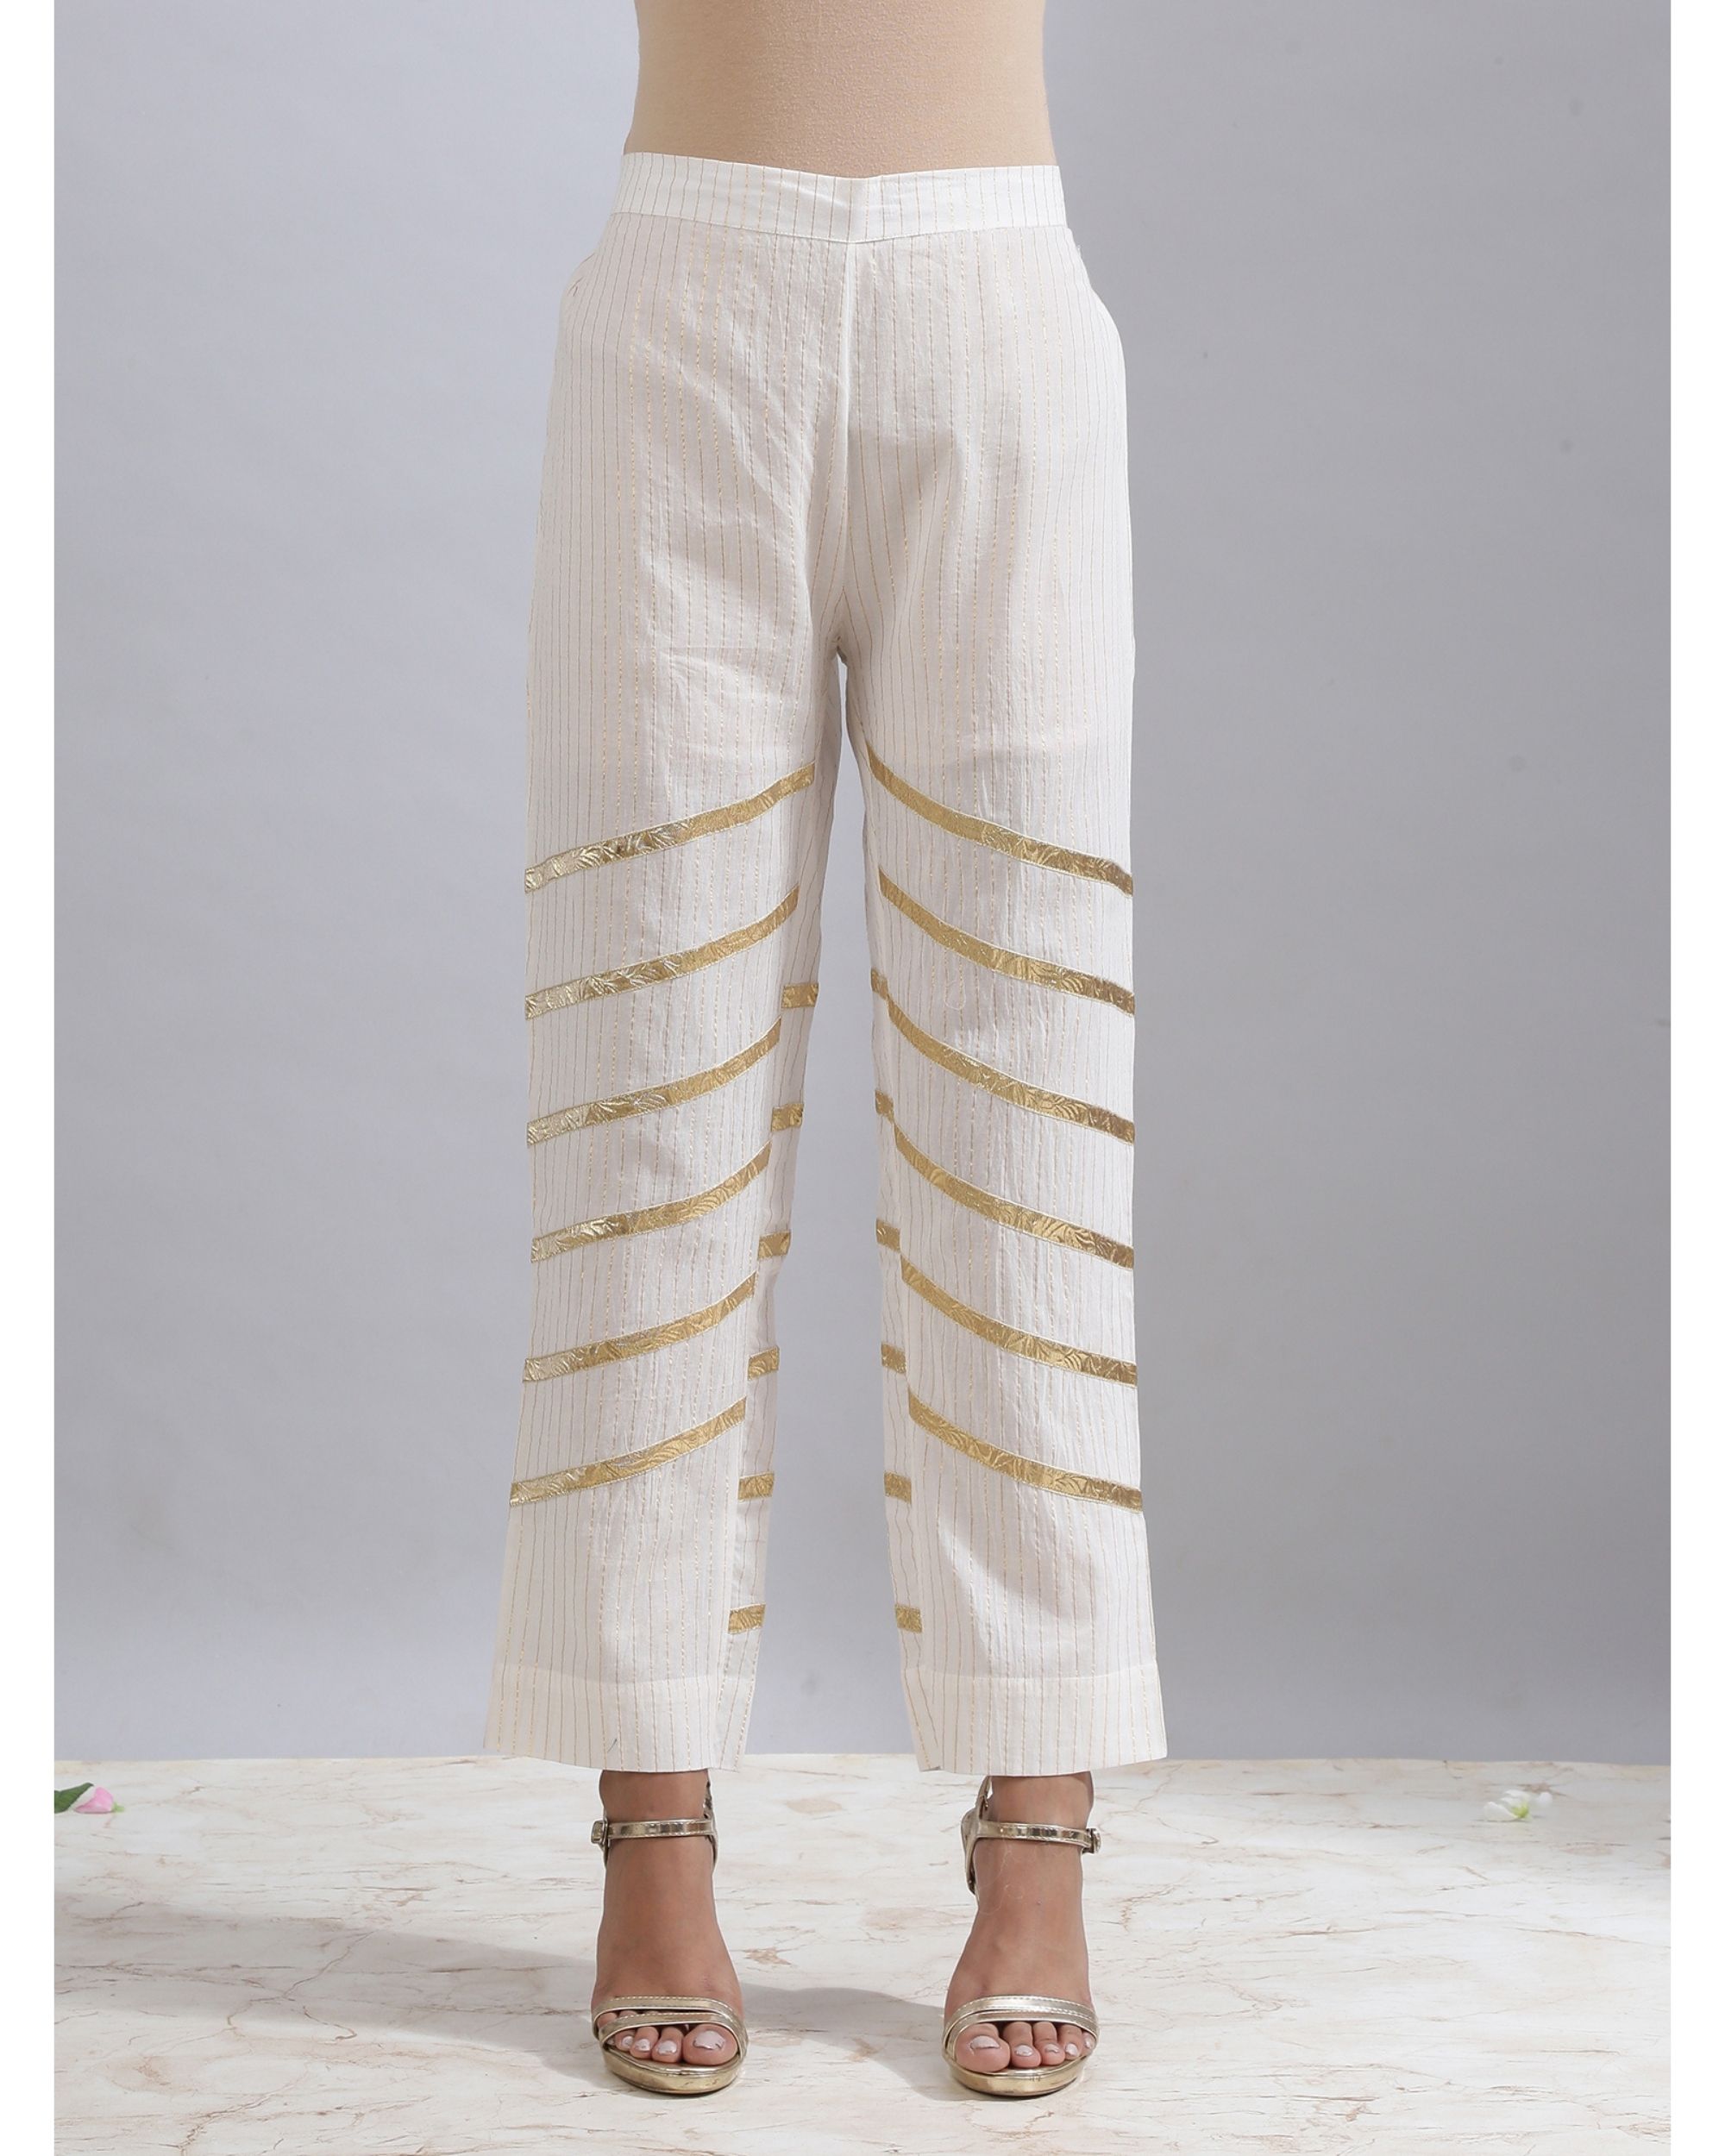 Ivory gota striped pants by Maison Shefali | The Secret Label